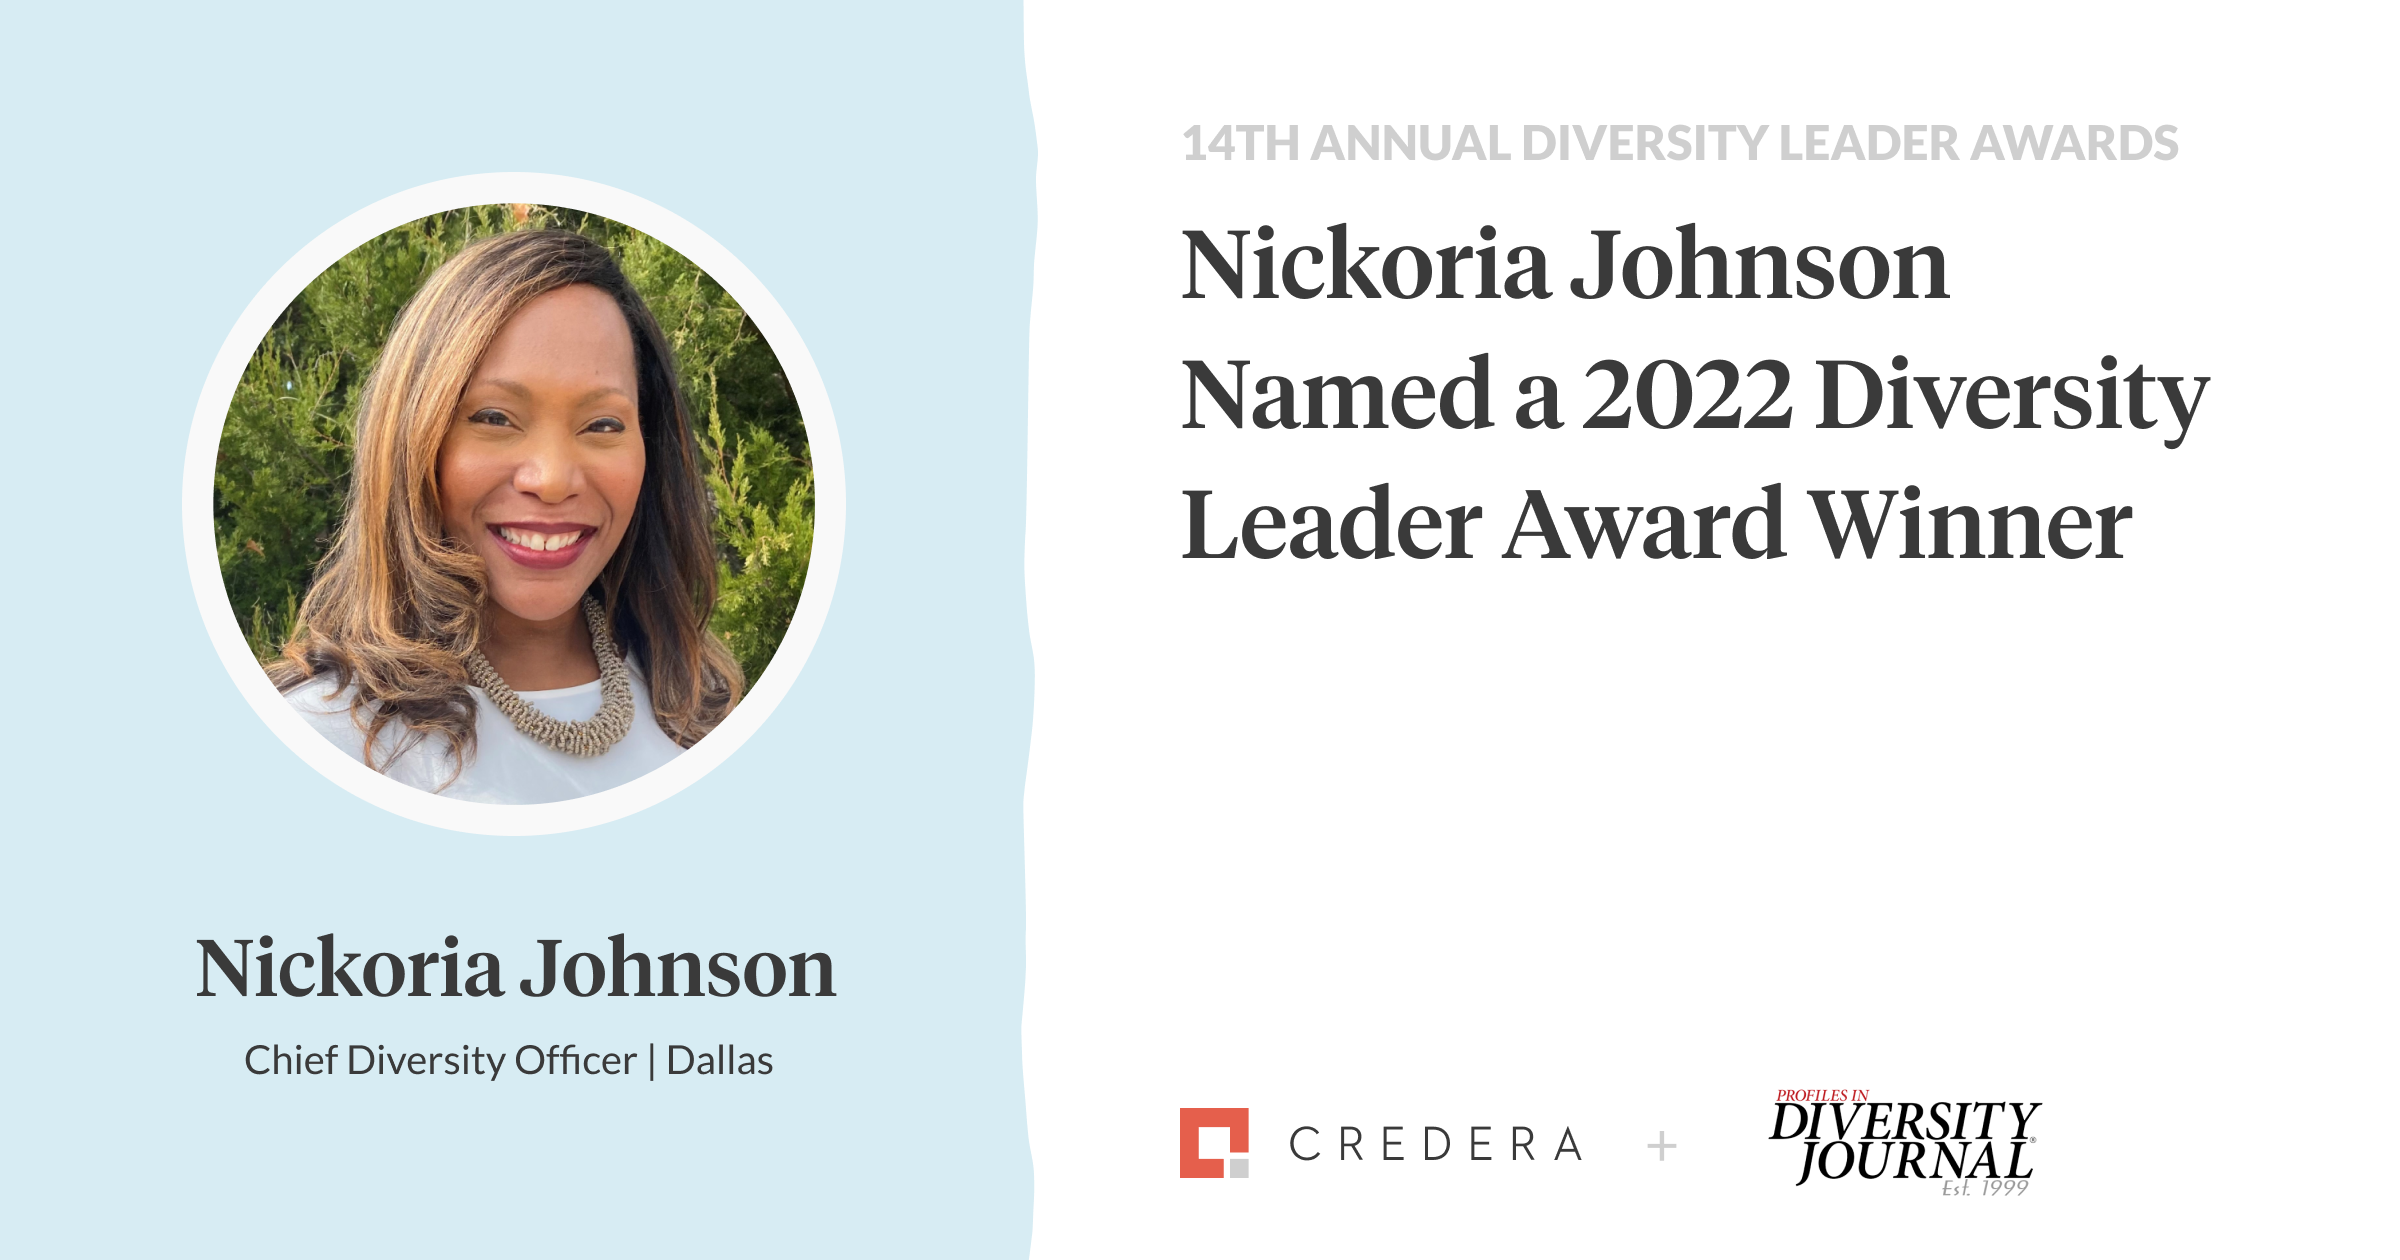 Credera’s Nickoria Johnson Named a 2022 Diversity Leader Award Winner